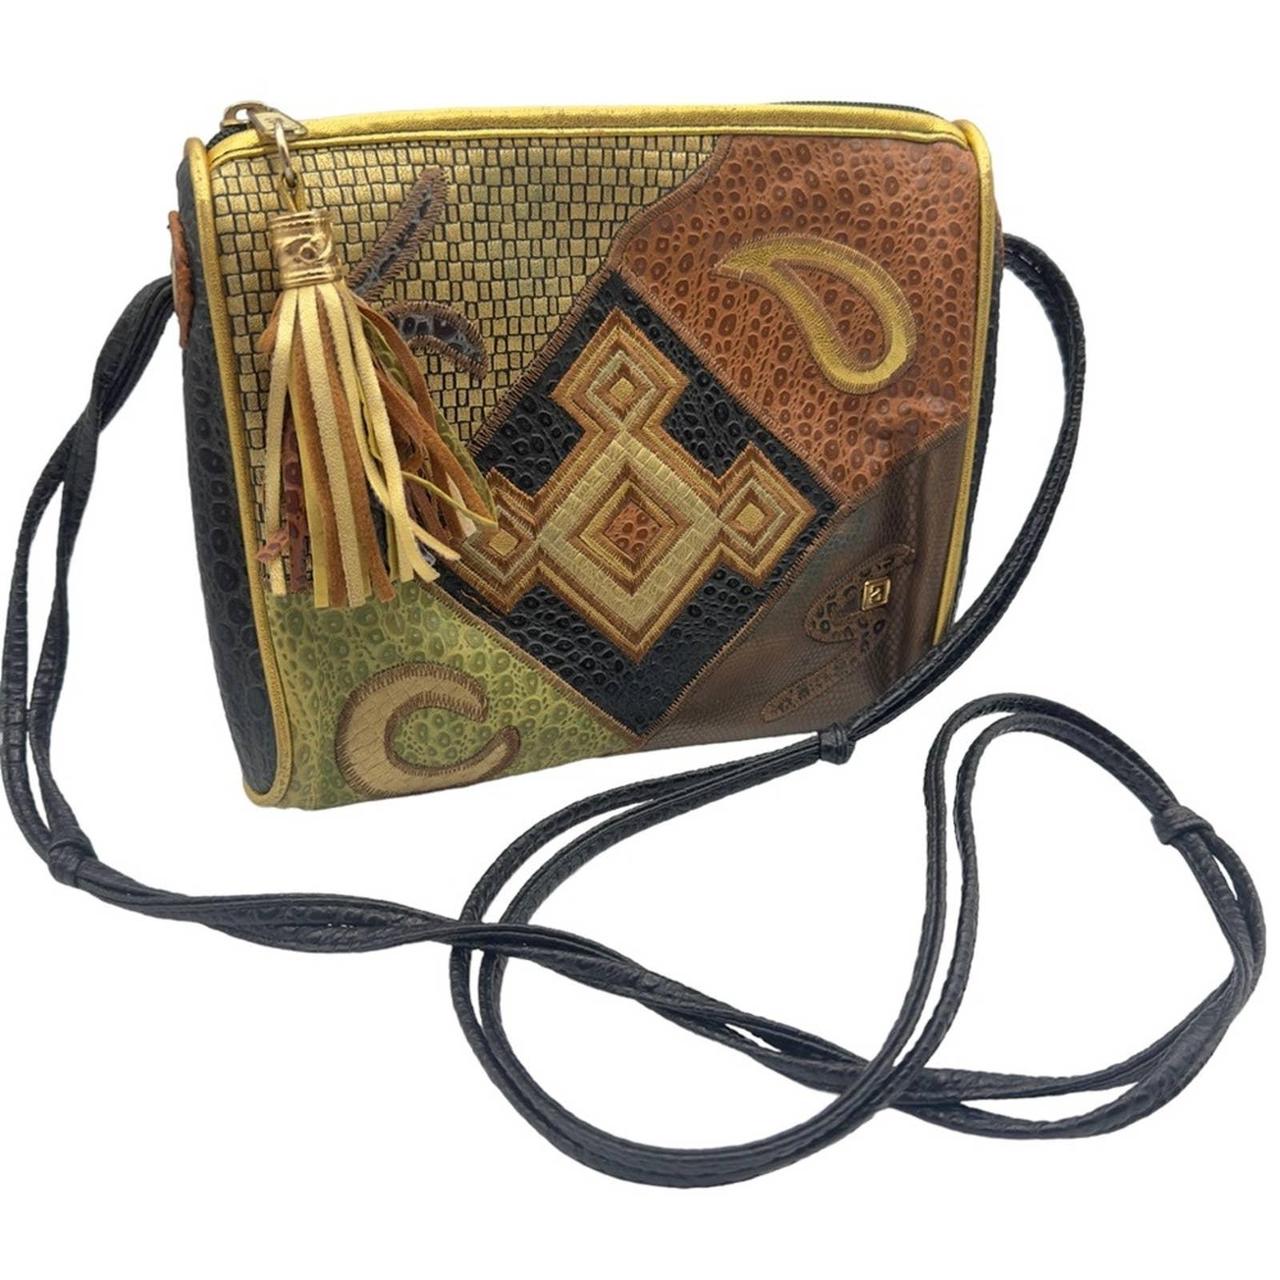 Vintage patchwork leather bag 🌈ABOUT THE... - Depop